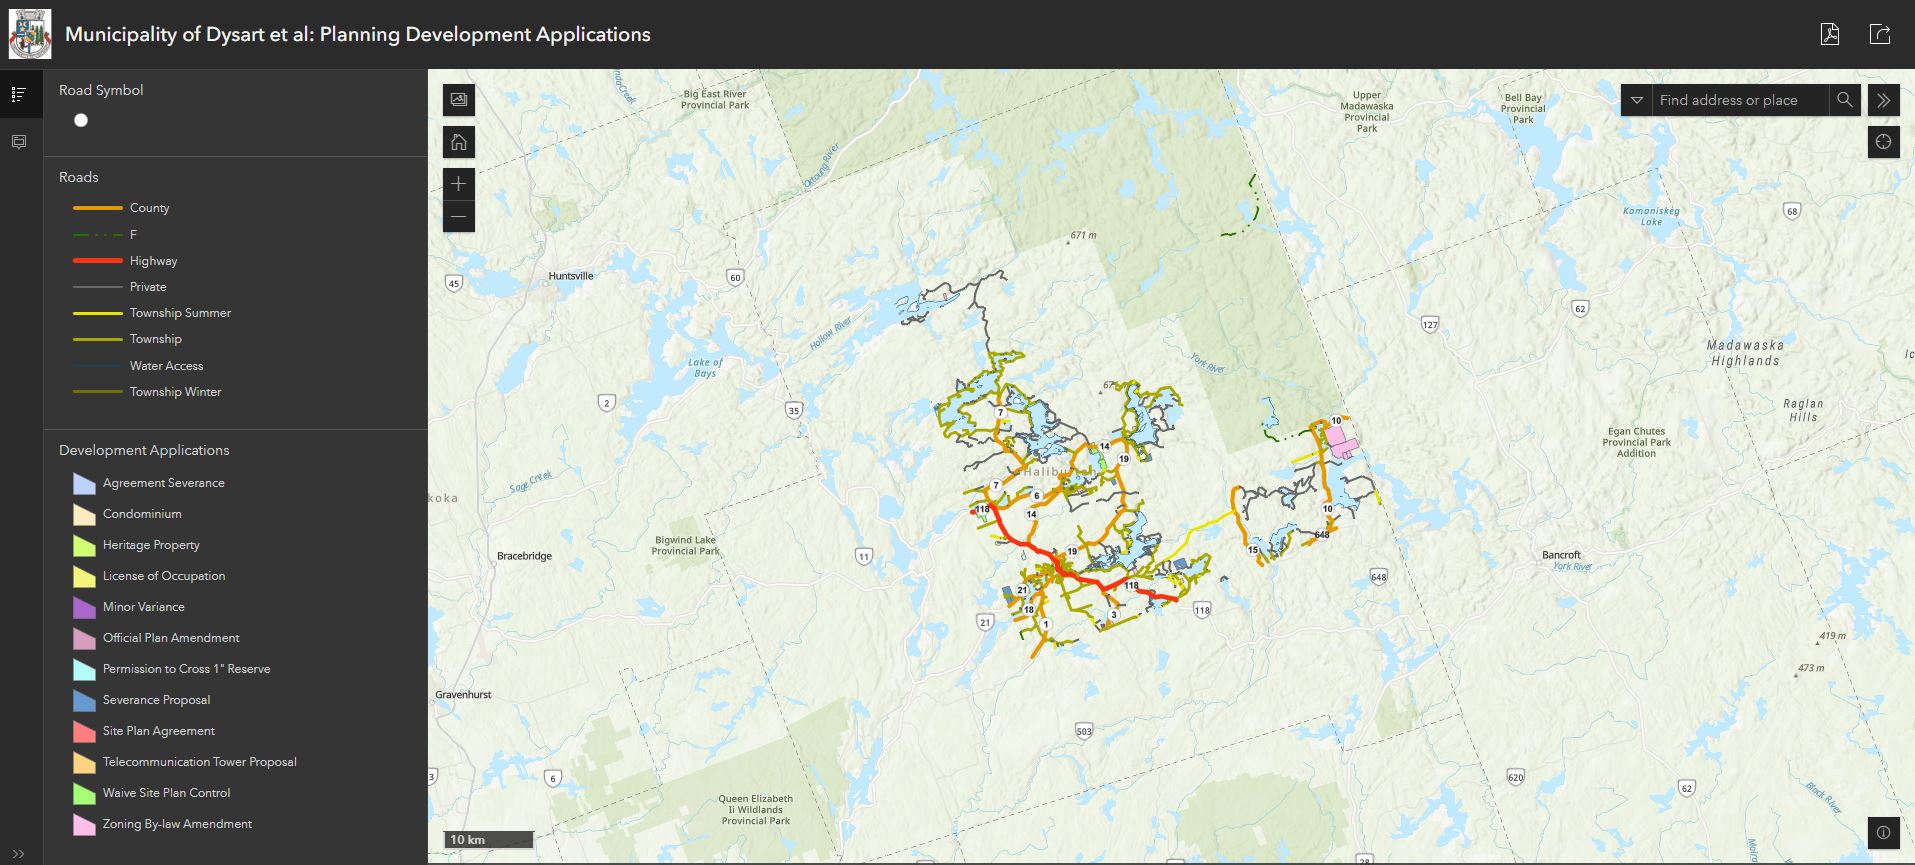 Planning Development Applications Interactive Map